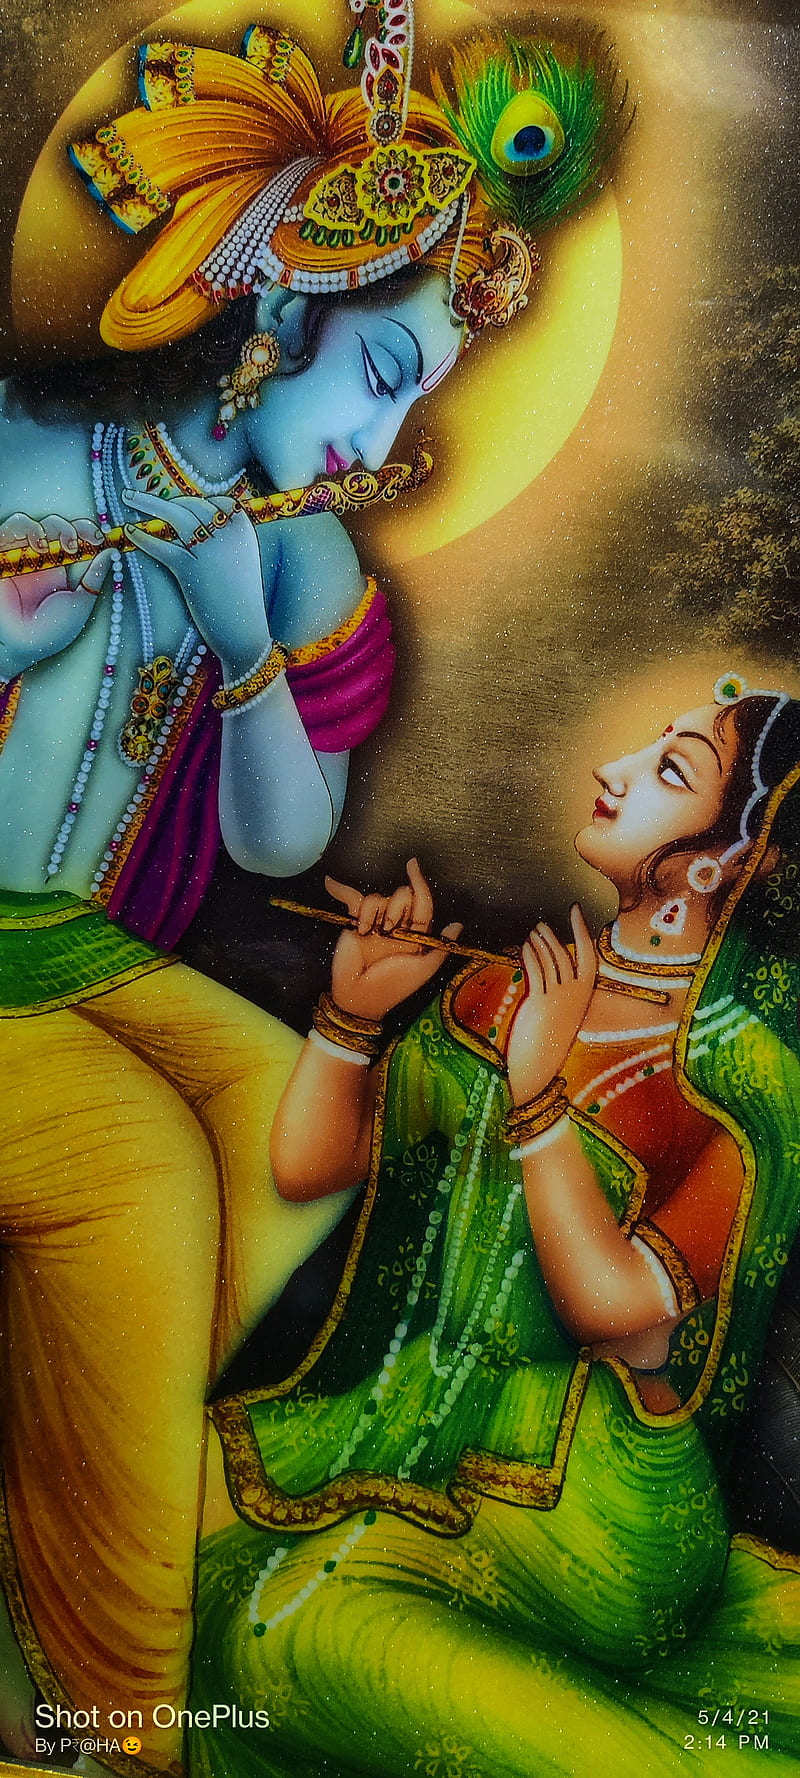 100+] Cute Radha Krishna Wallpapers | Wallpapers.com